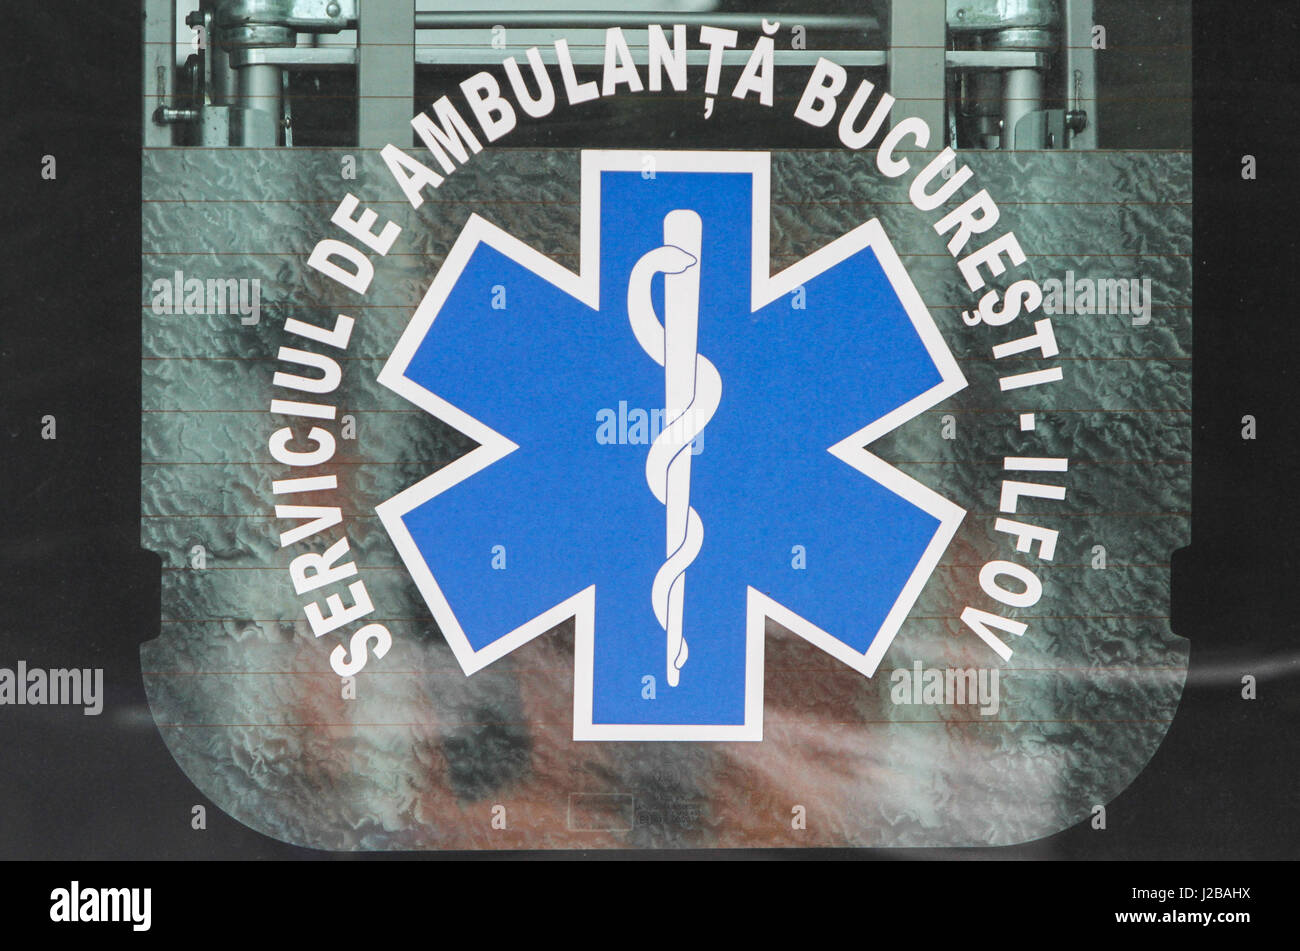 BUCHAREST, ROMANIA, June 4, 2016: Bucharest ambulance service sign. Stock Photo